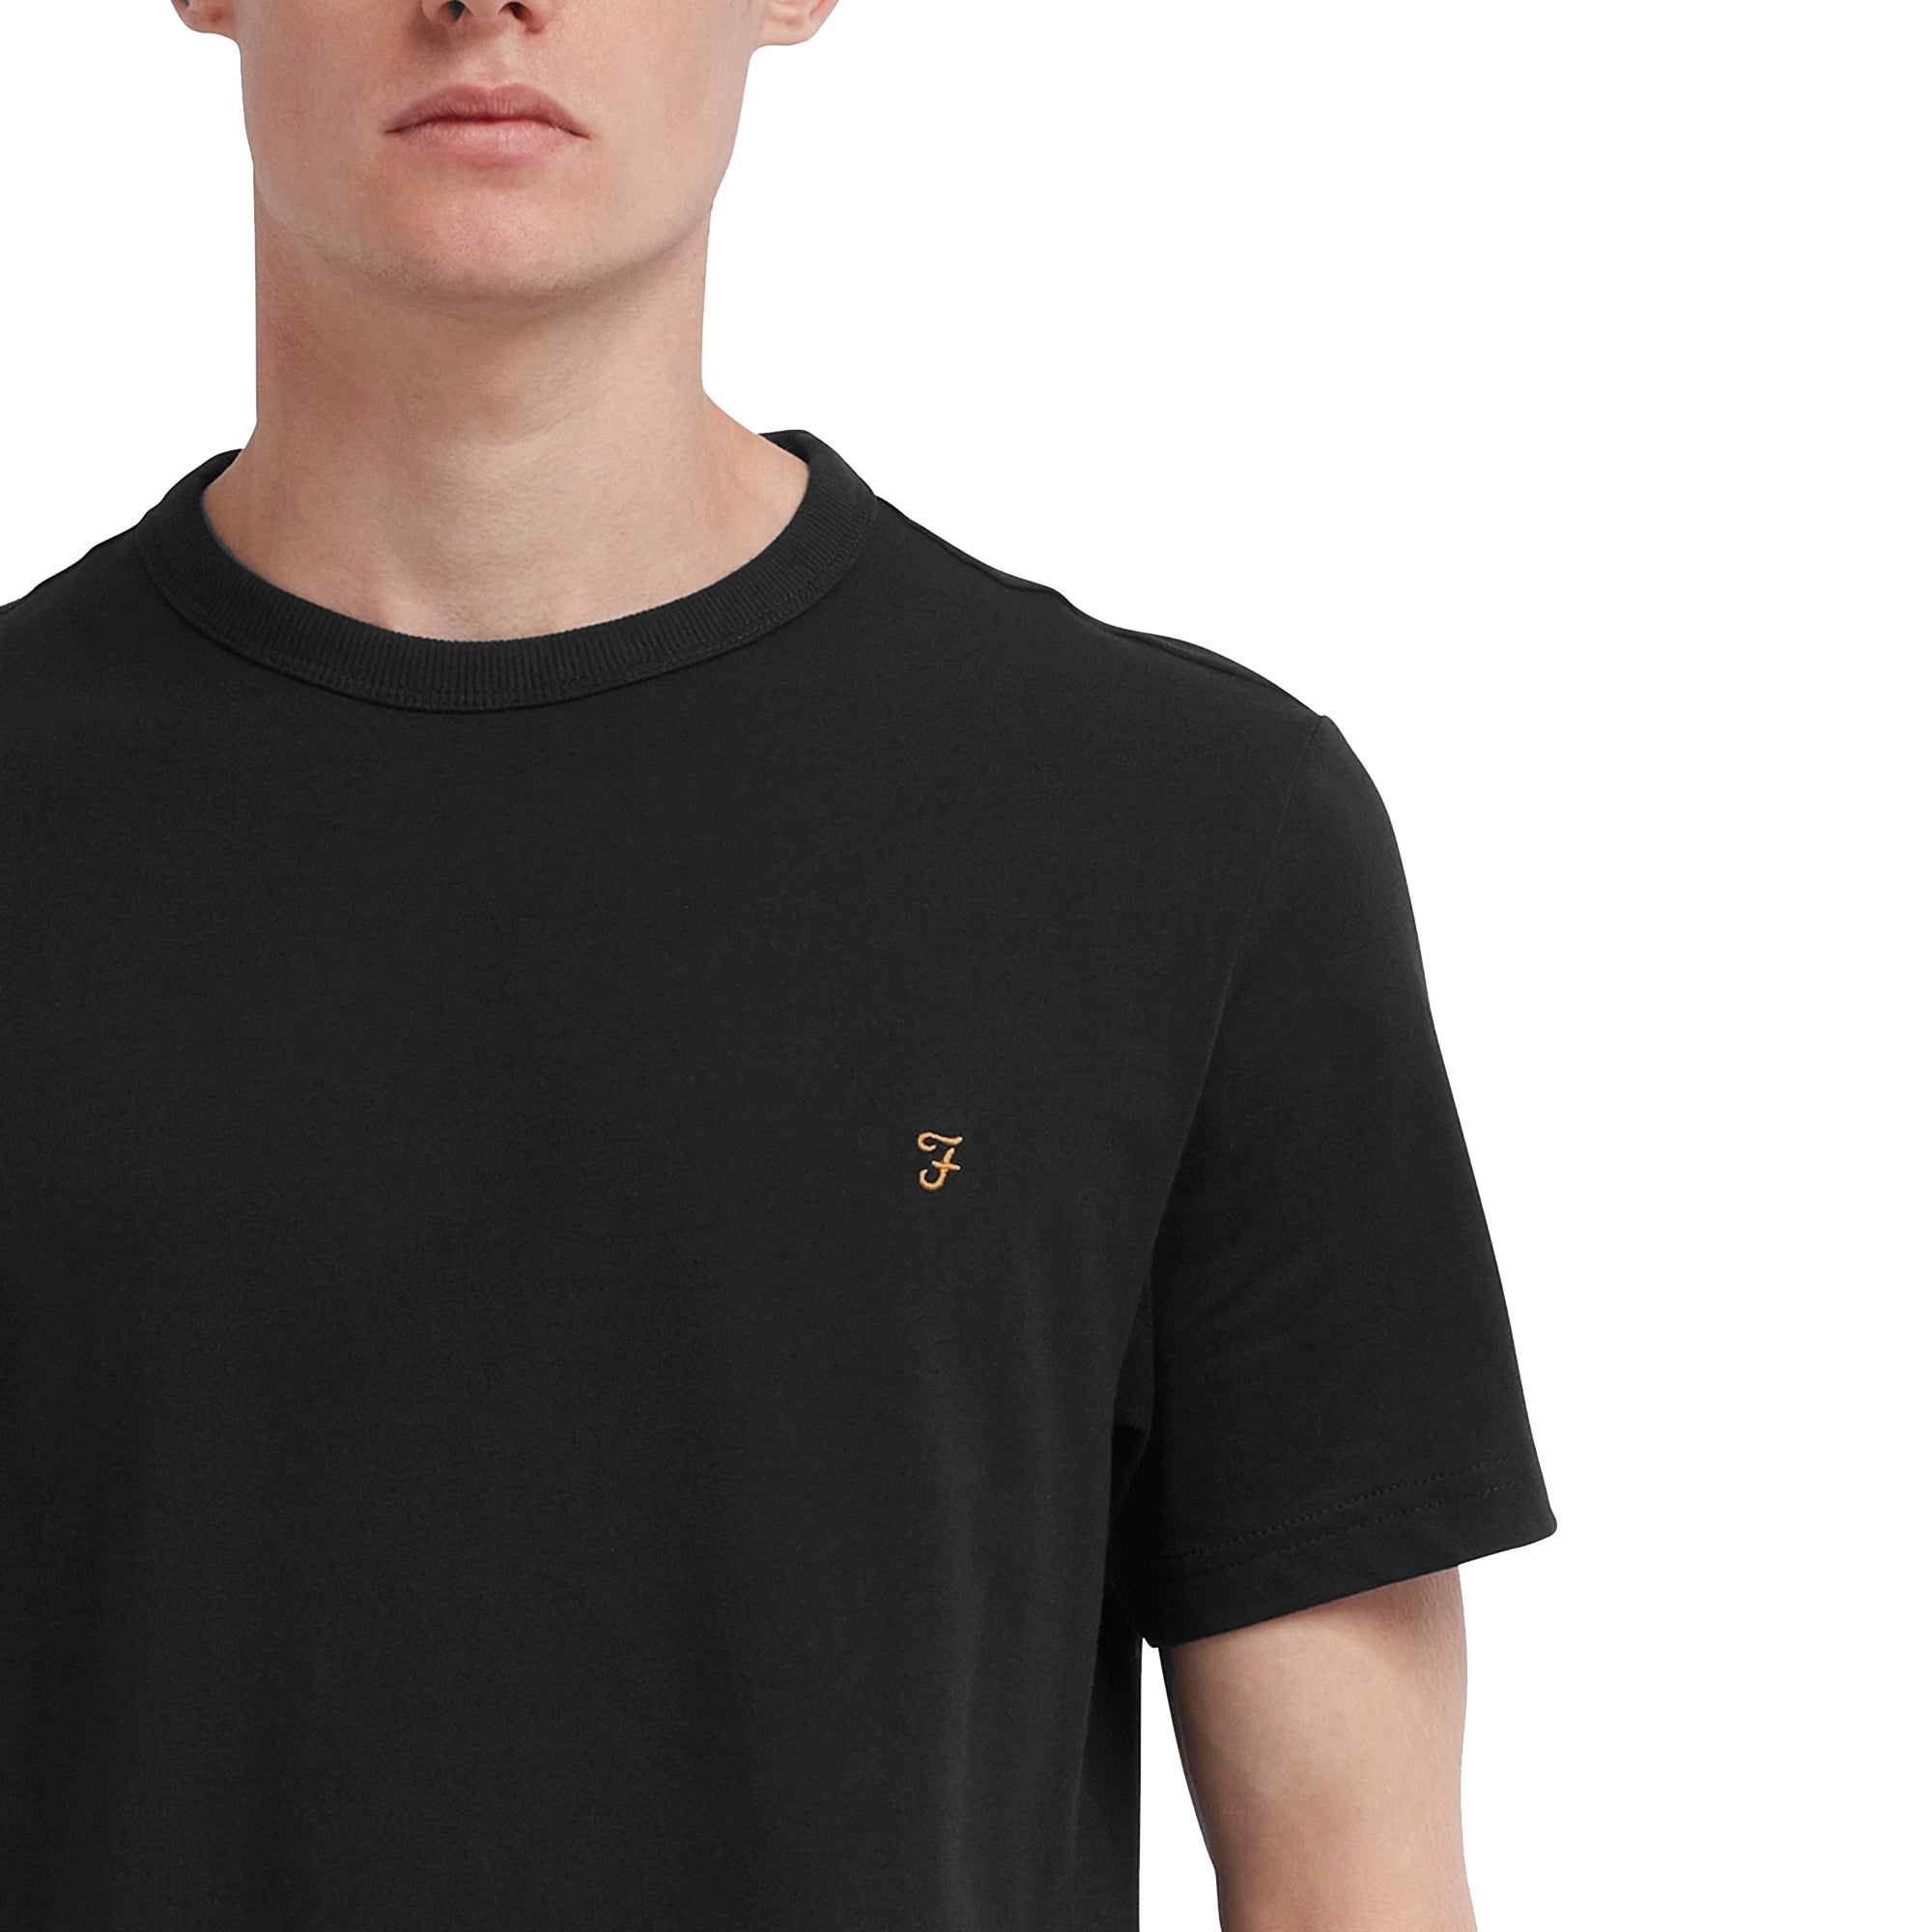 Farah New Danny T-Shirt - Black